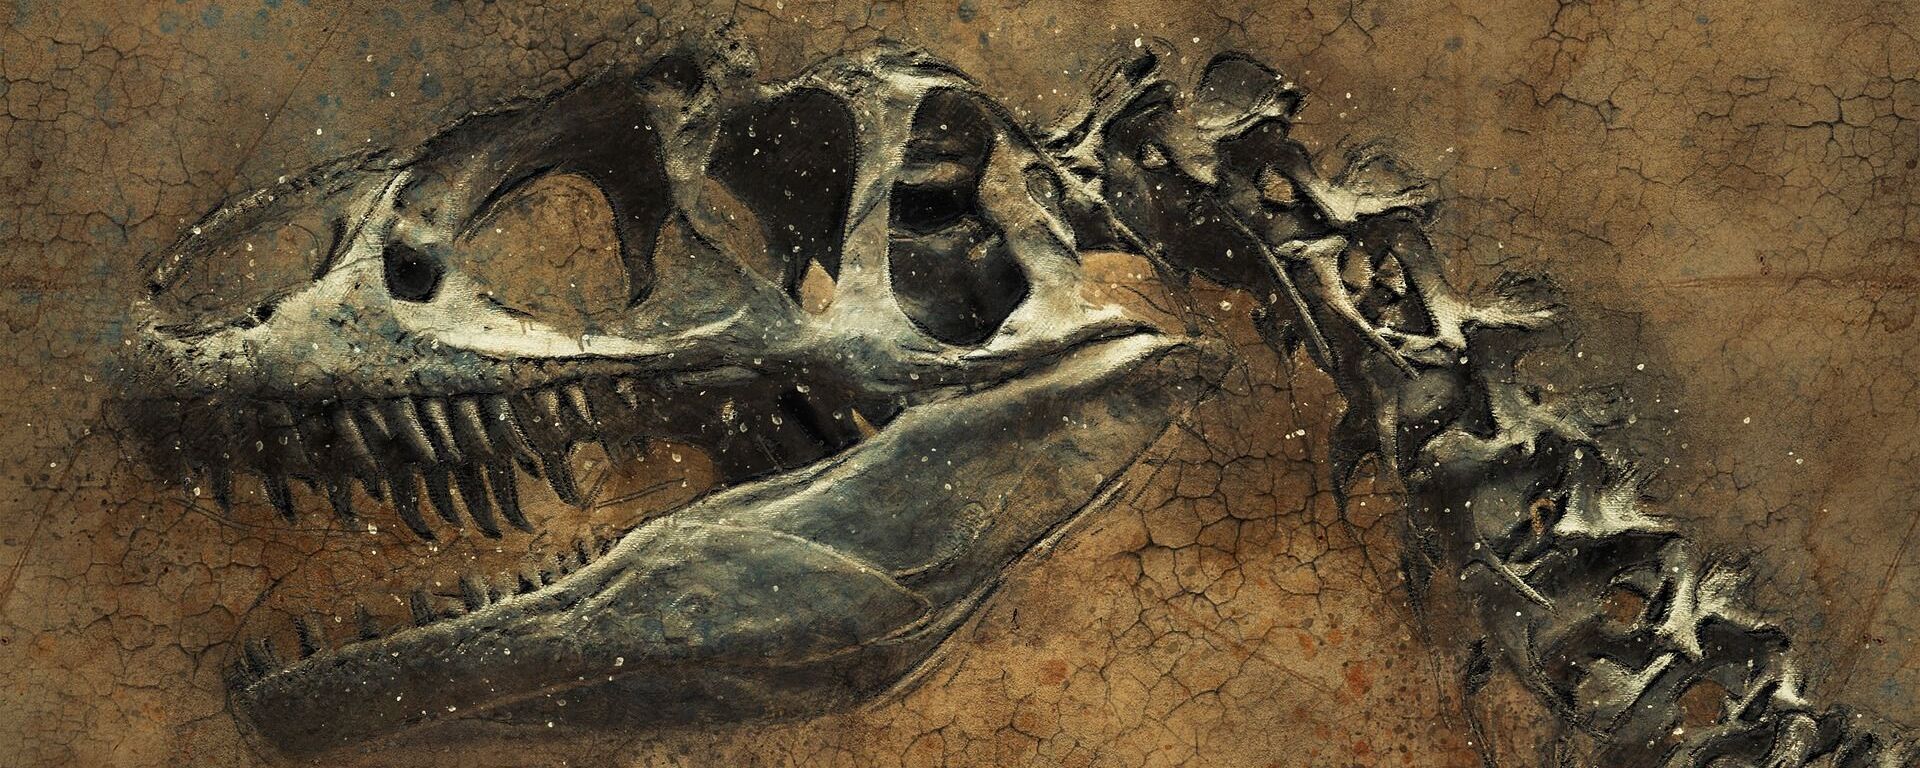 El esqueleto de un dinosaurio - Sputnik Mundo, 1920, 31.03.2021